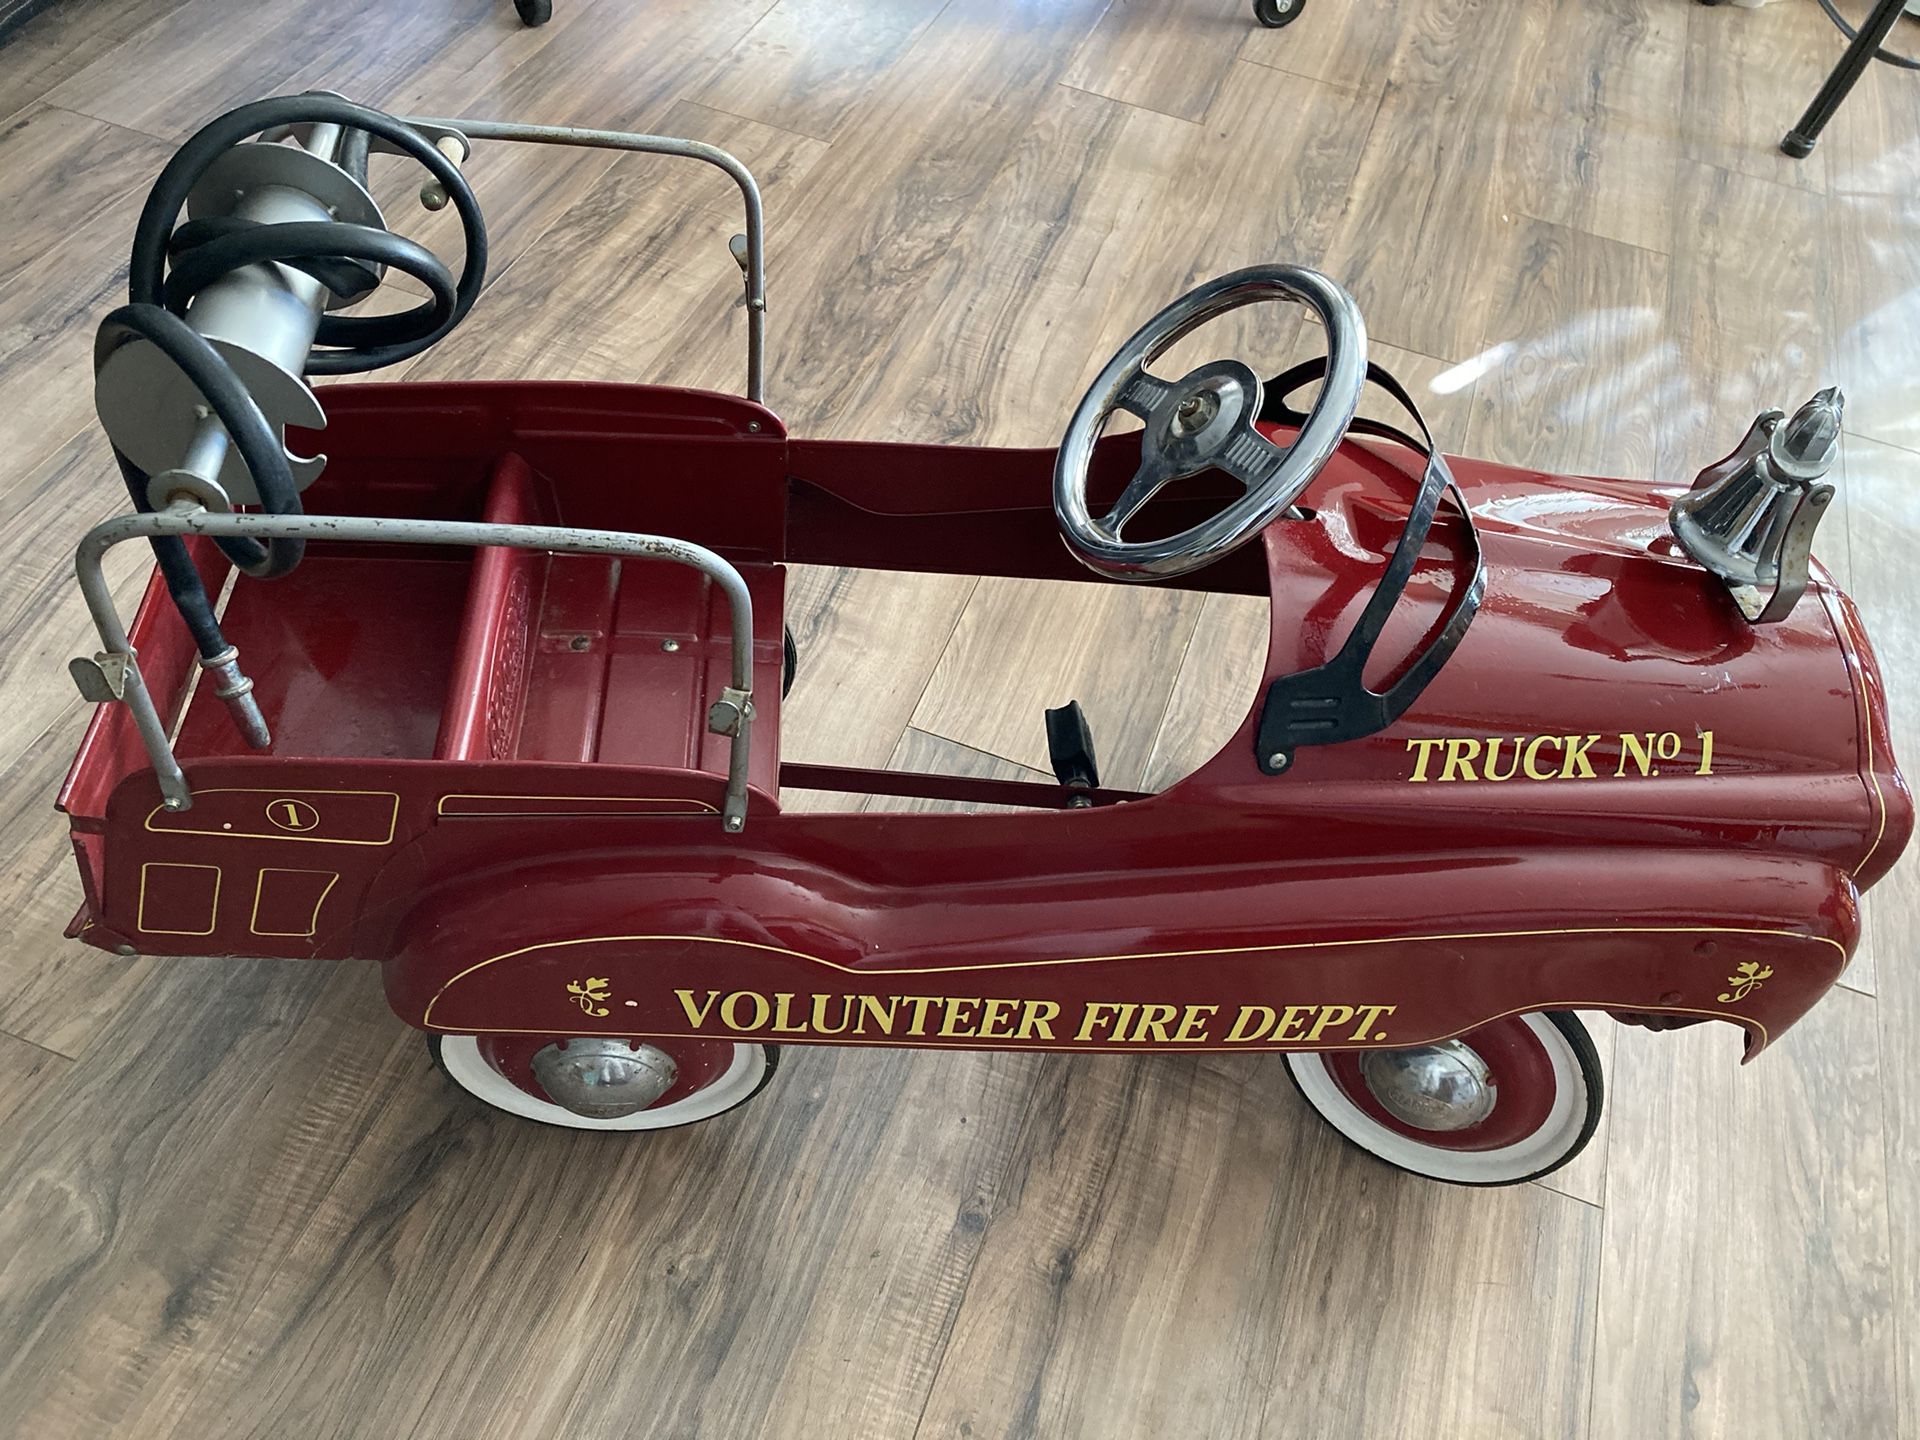 Fire Engine Pedal Car